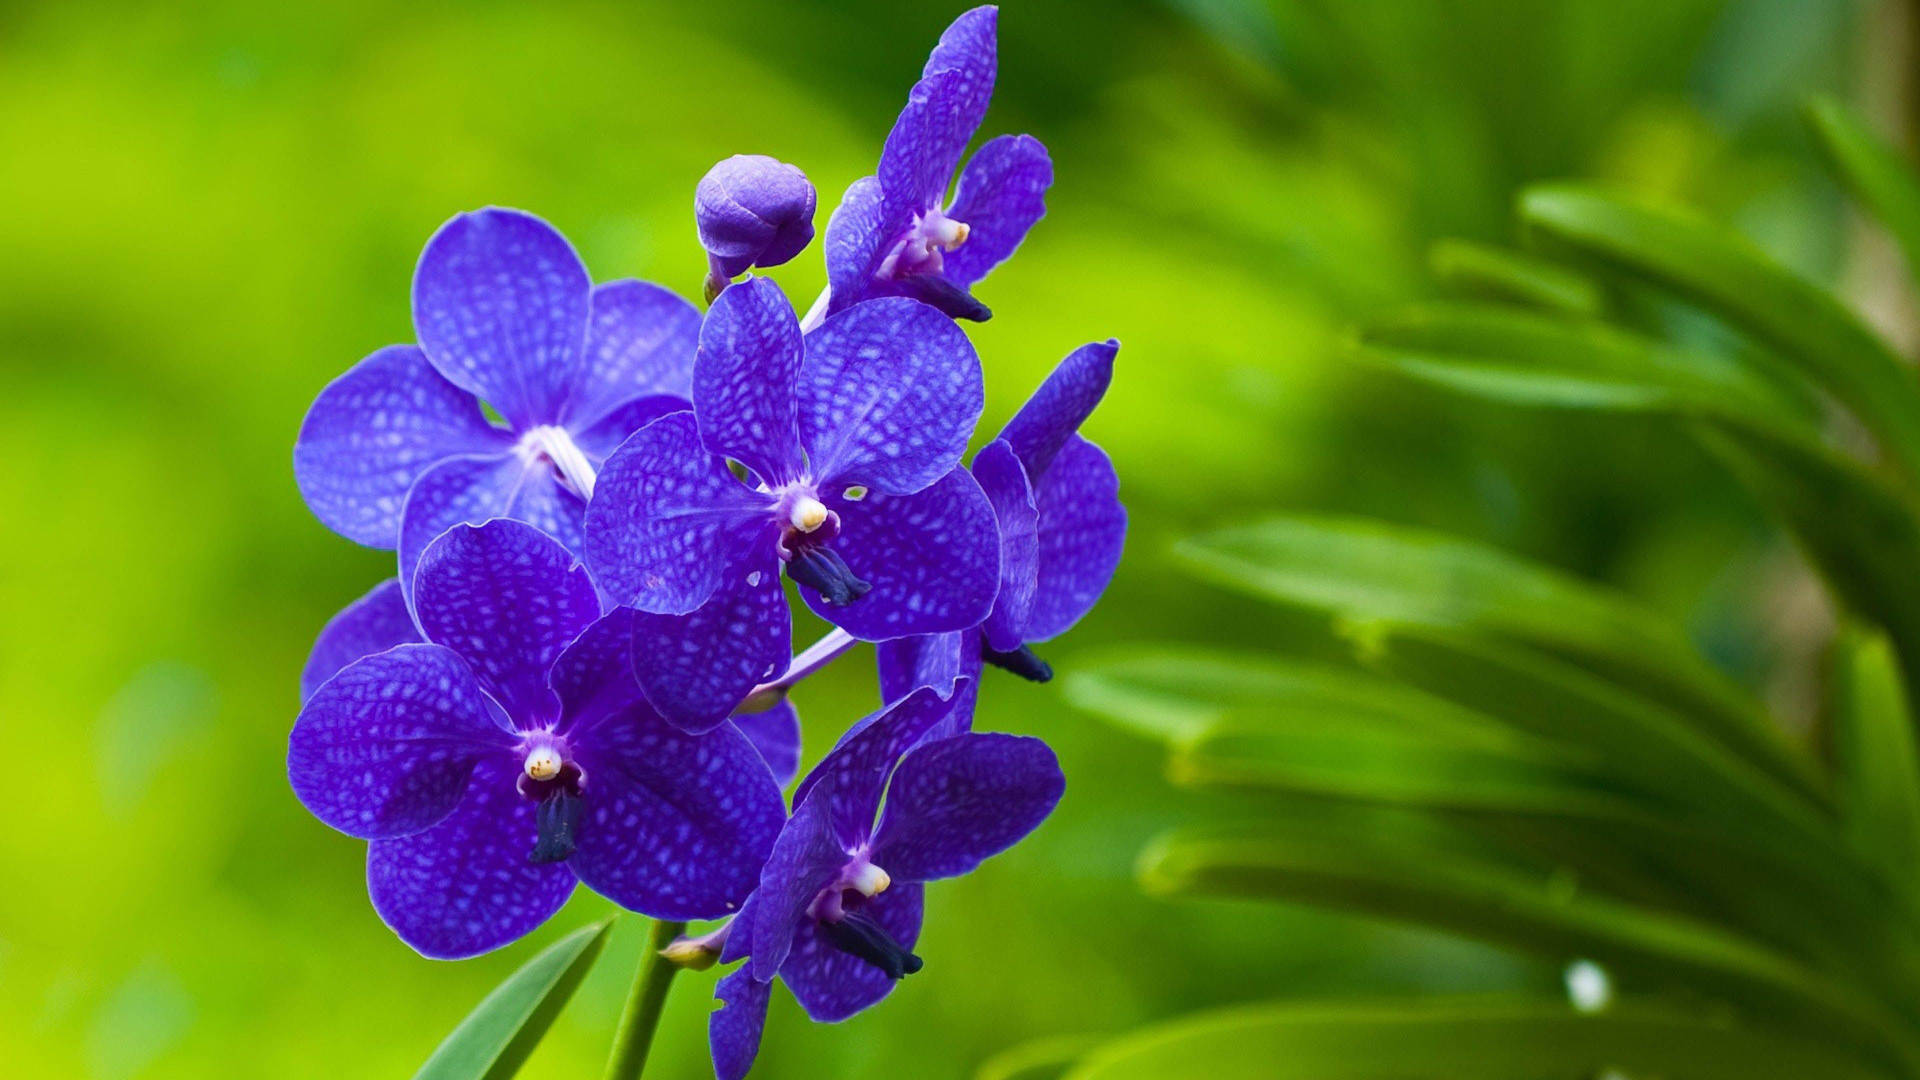 Purple Flower With White Spots Wallpaper